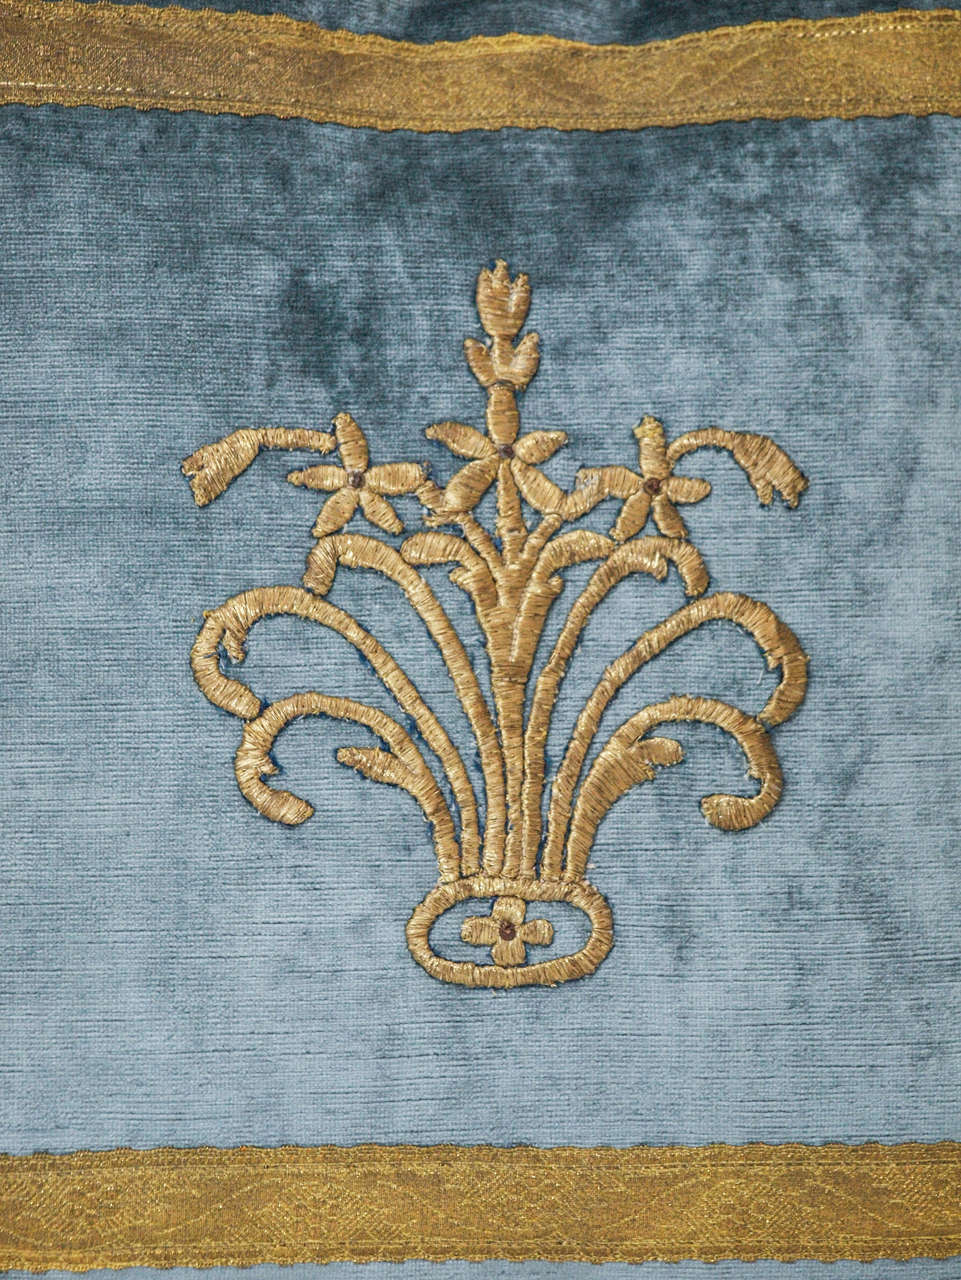 19th Century Antique Ottoman Empire Gold Metallic Embroidery B. VIZ Pillows